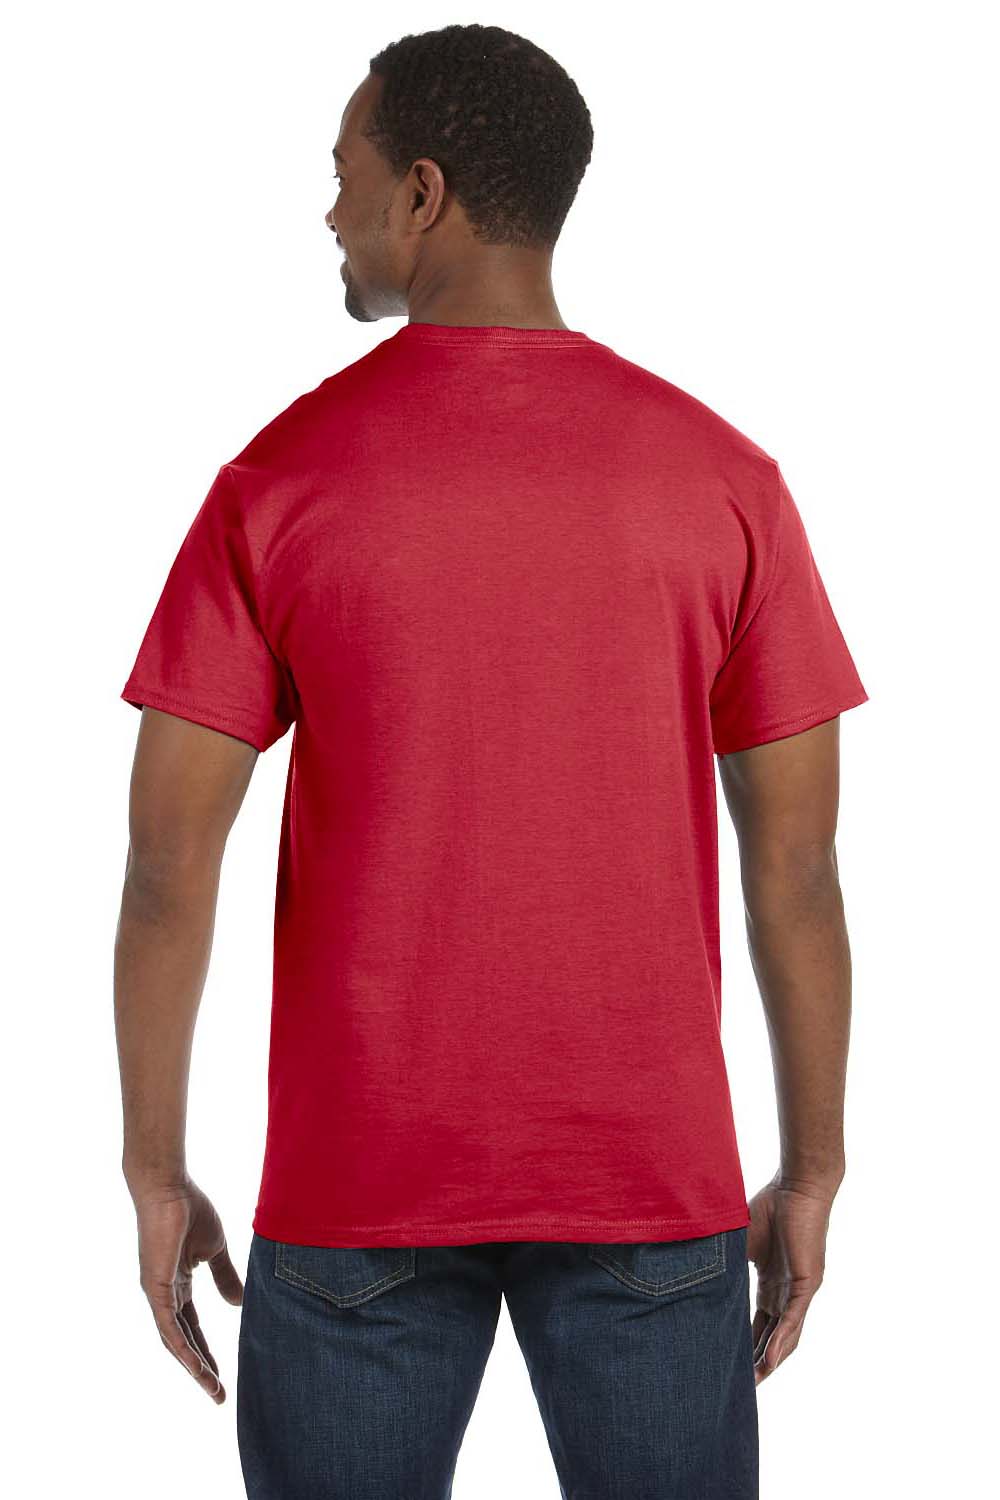 Jerzees 29M Mens Dri-Power Moisture Wicking Short Sleeve Crewneck T-Shirt Red Back